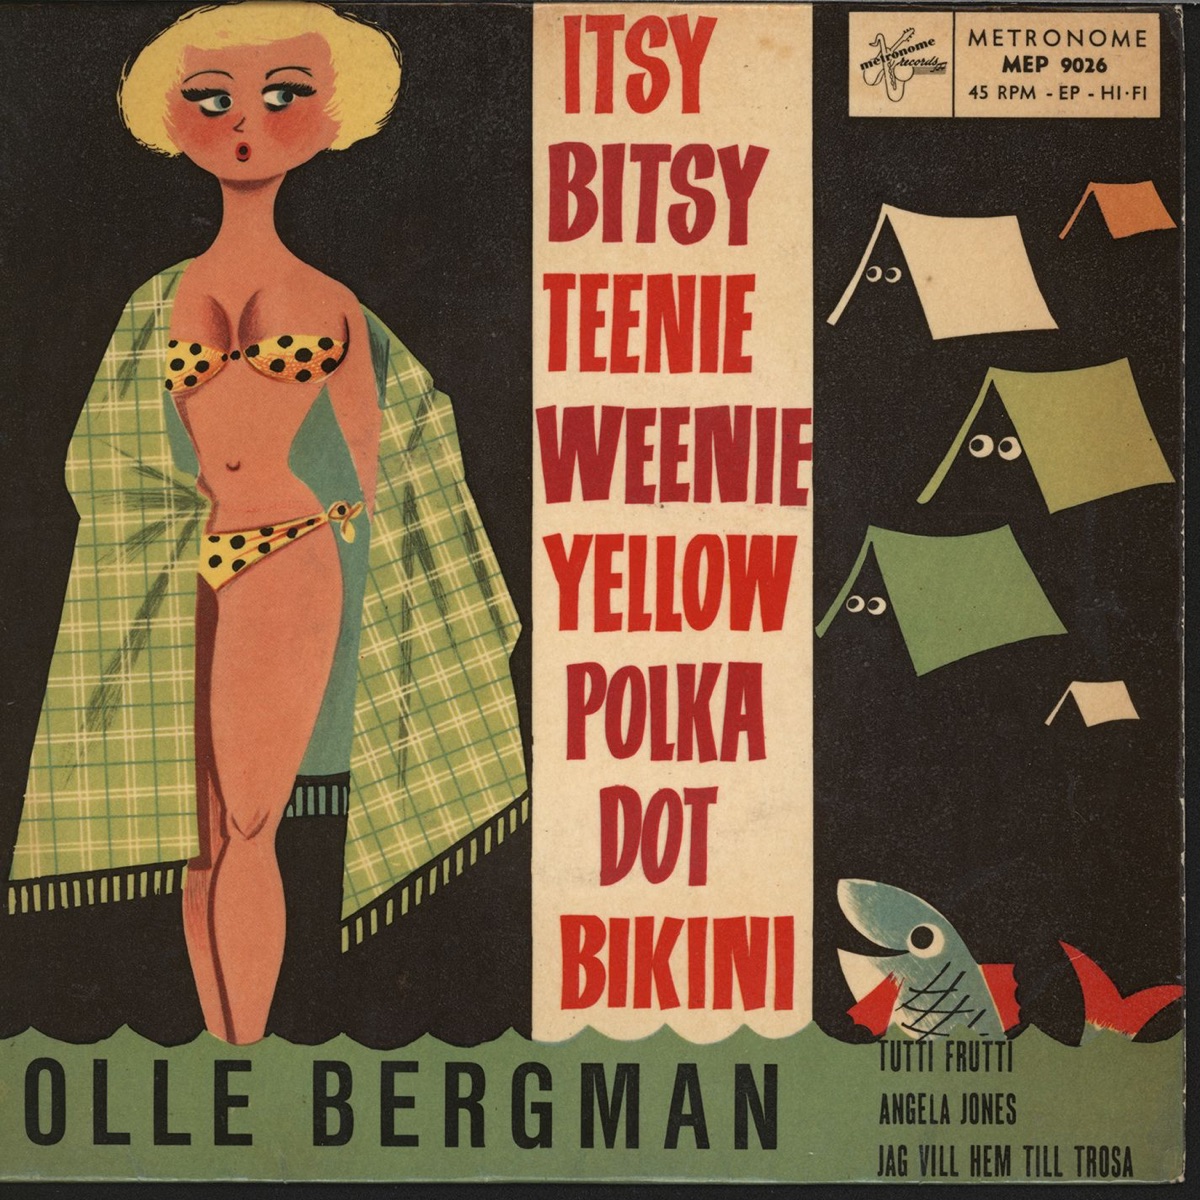 Itsy Bitsy Teenie Weenie Yellow Polka Dot Bikini - EP - Album by Olle  Bergman - Apple Music